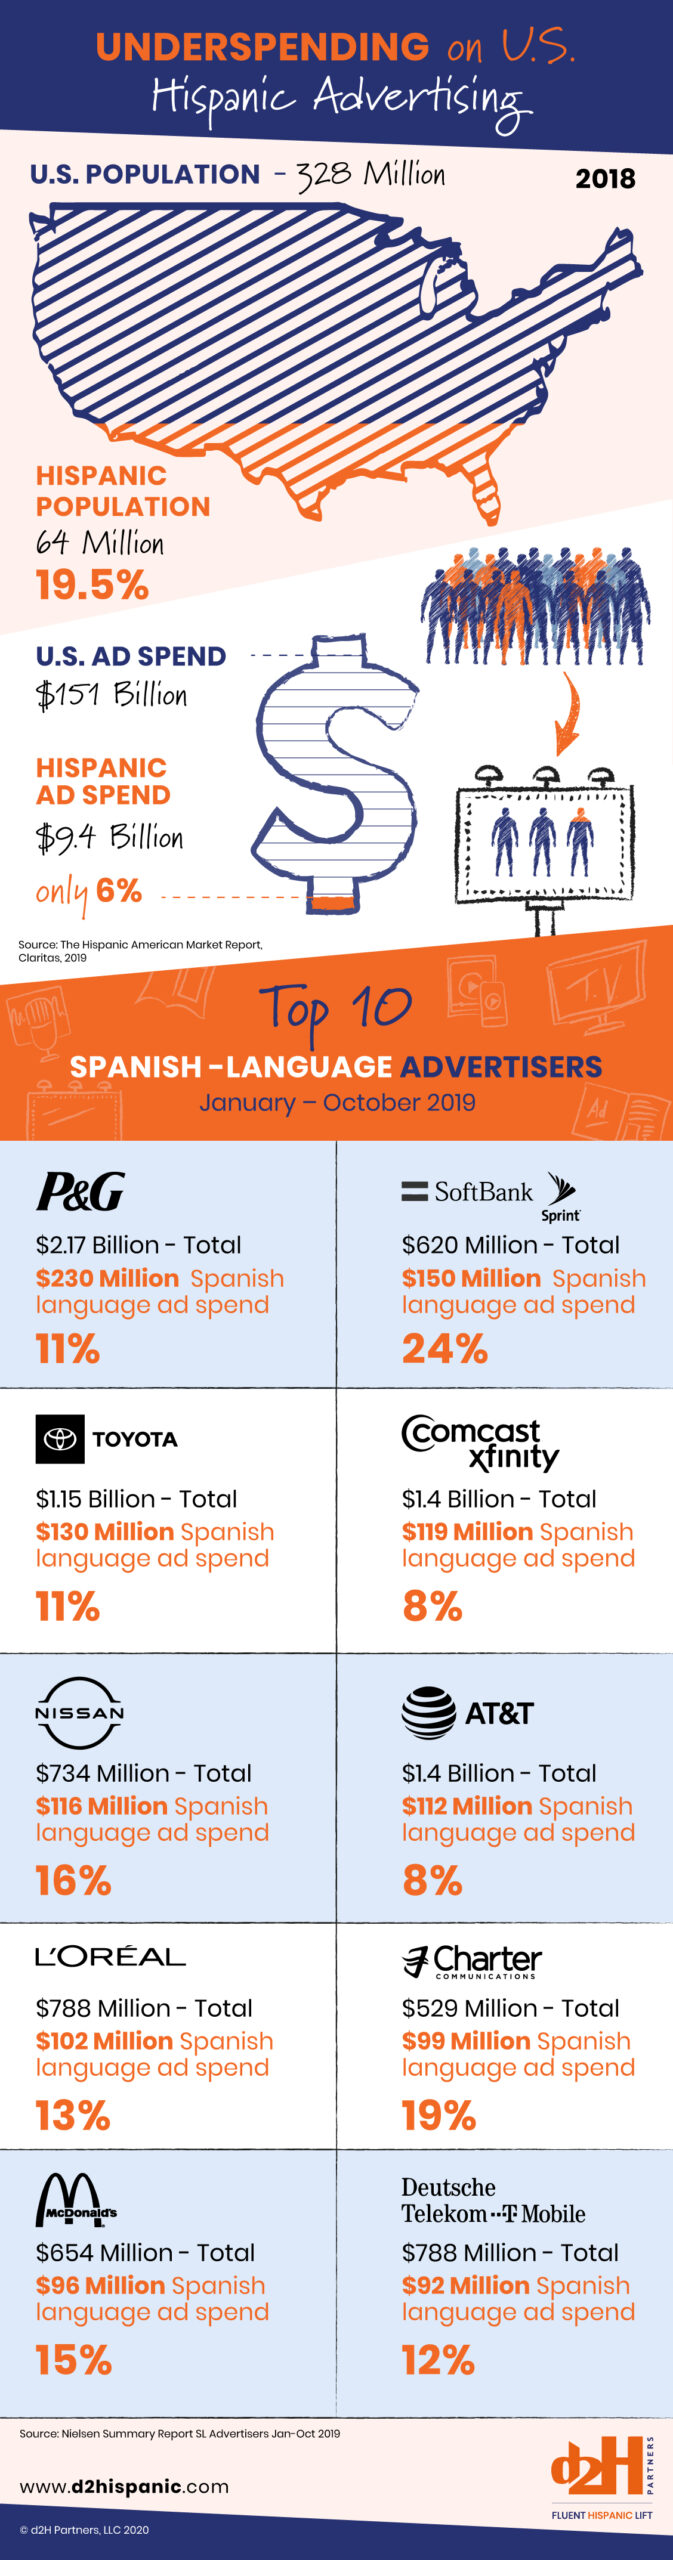 Underspending on US Hispanic Advertising